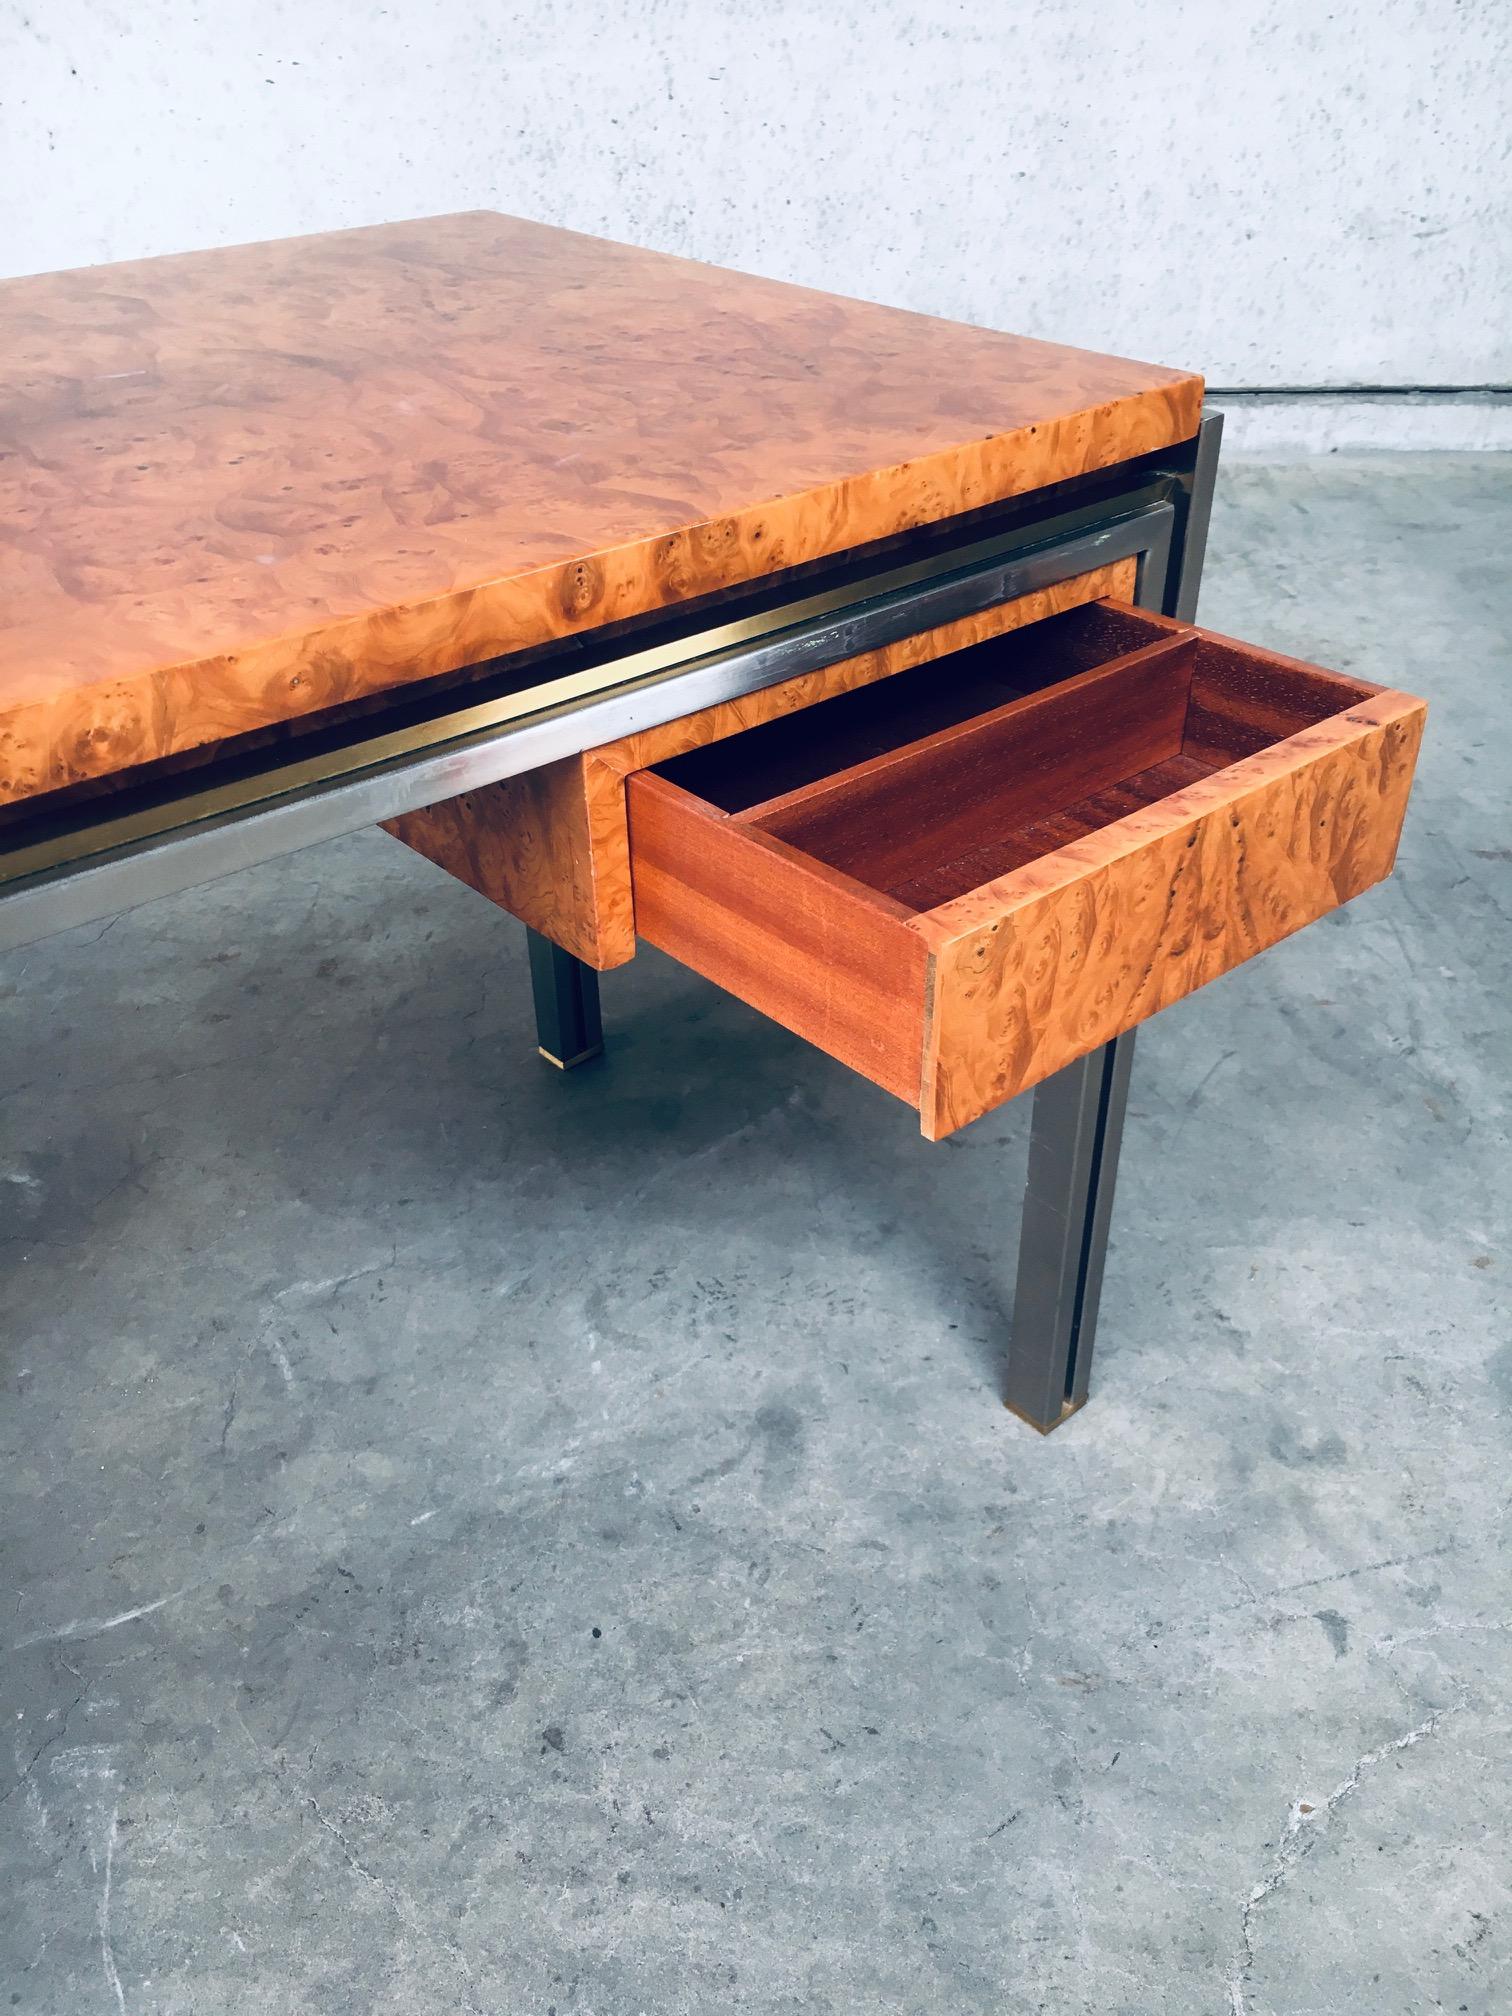 Postmodern Design in Style of Milo Baughman Burl Wood Desk, 1970's For Sale 1